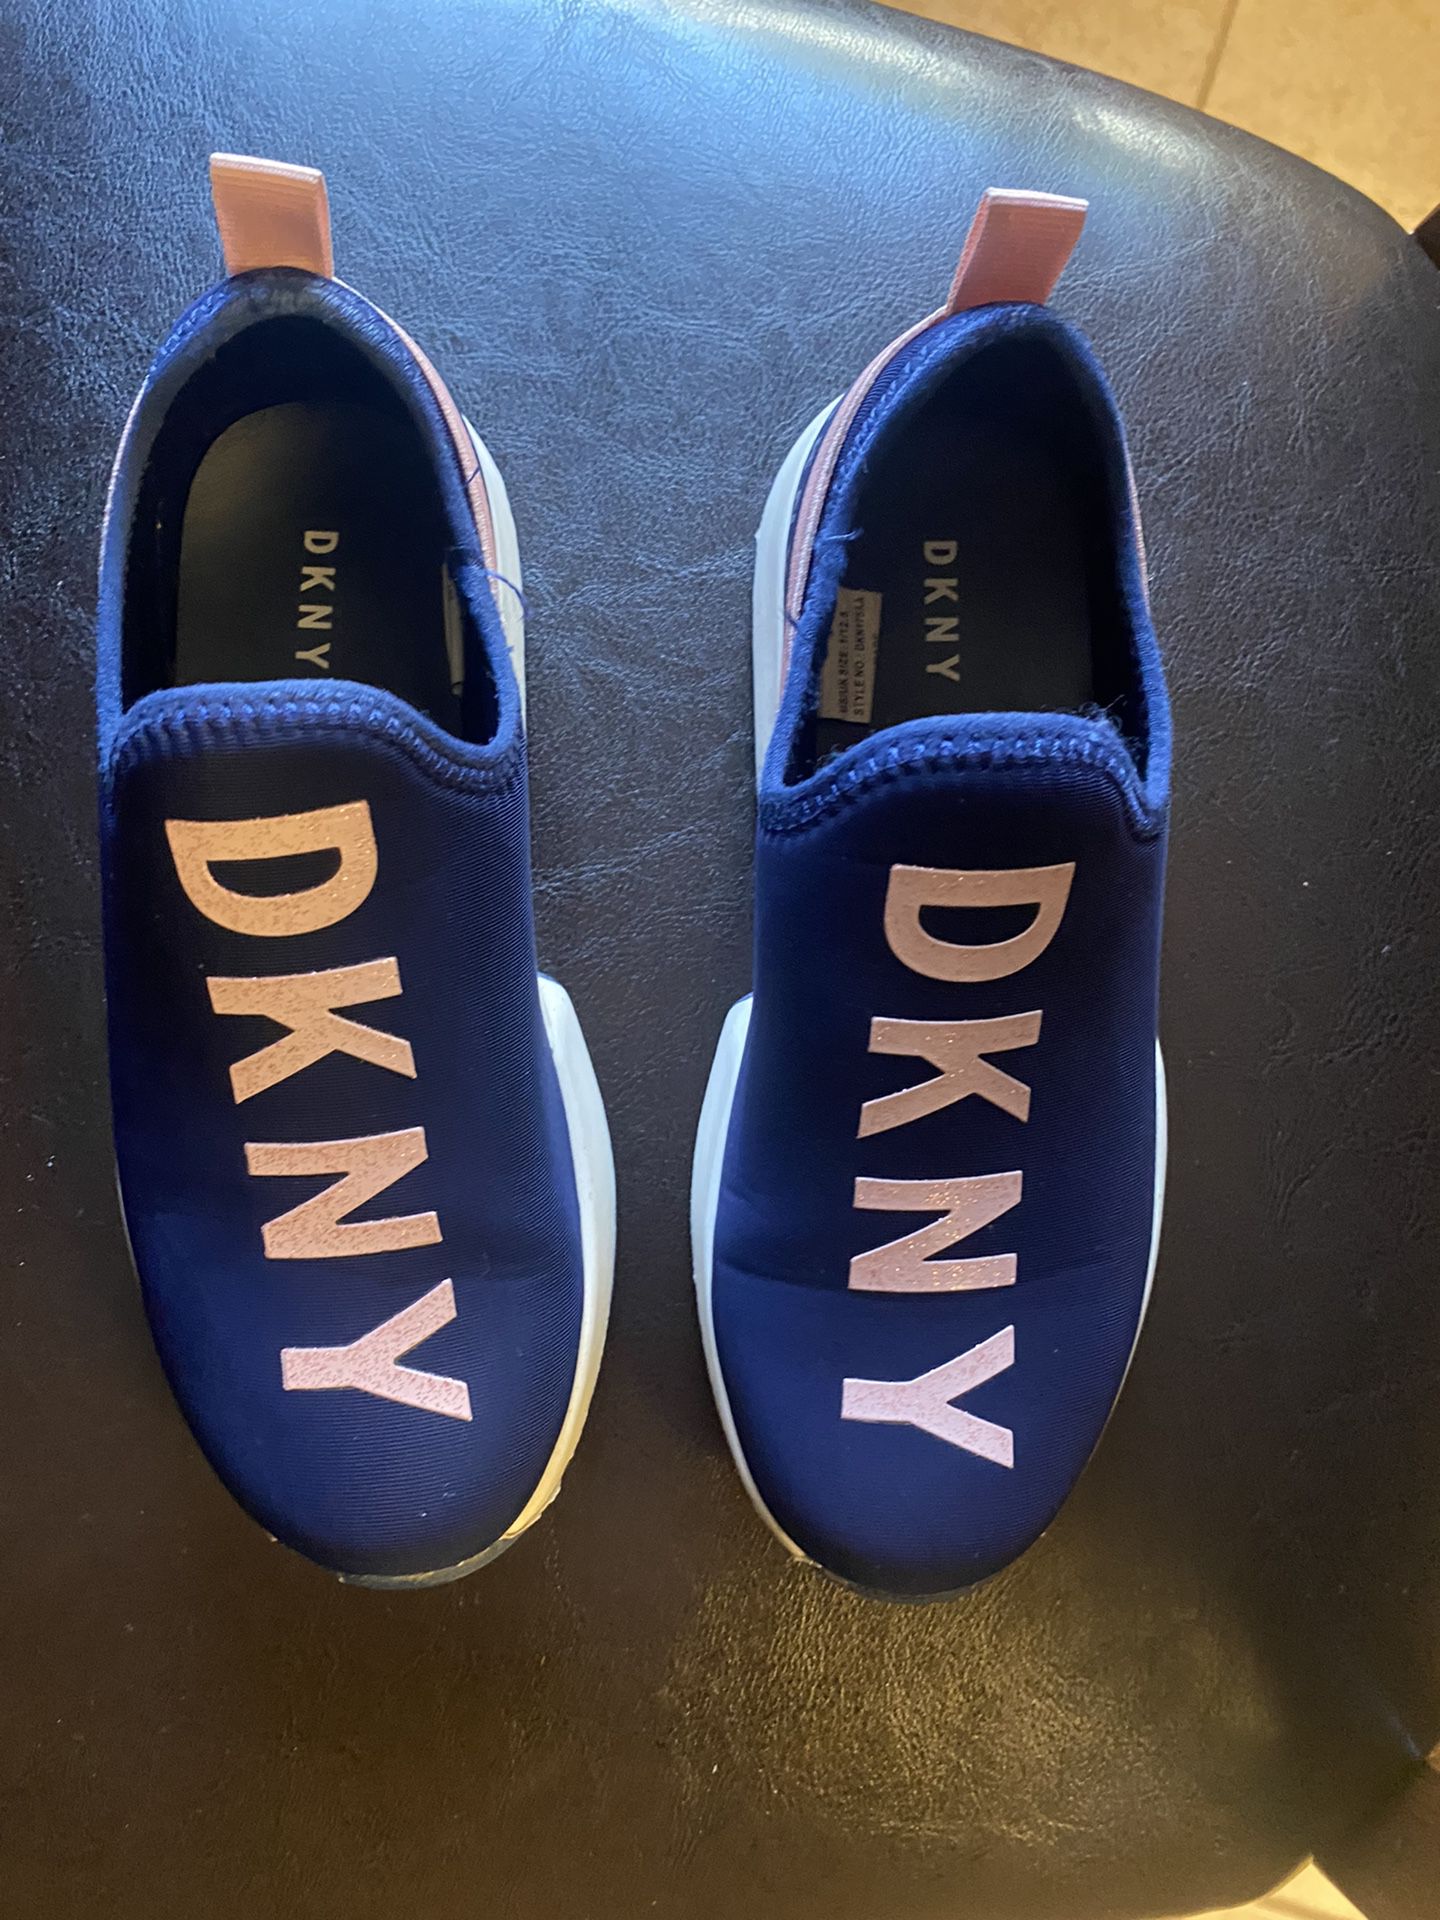 DKNY Shoes